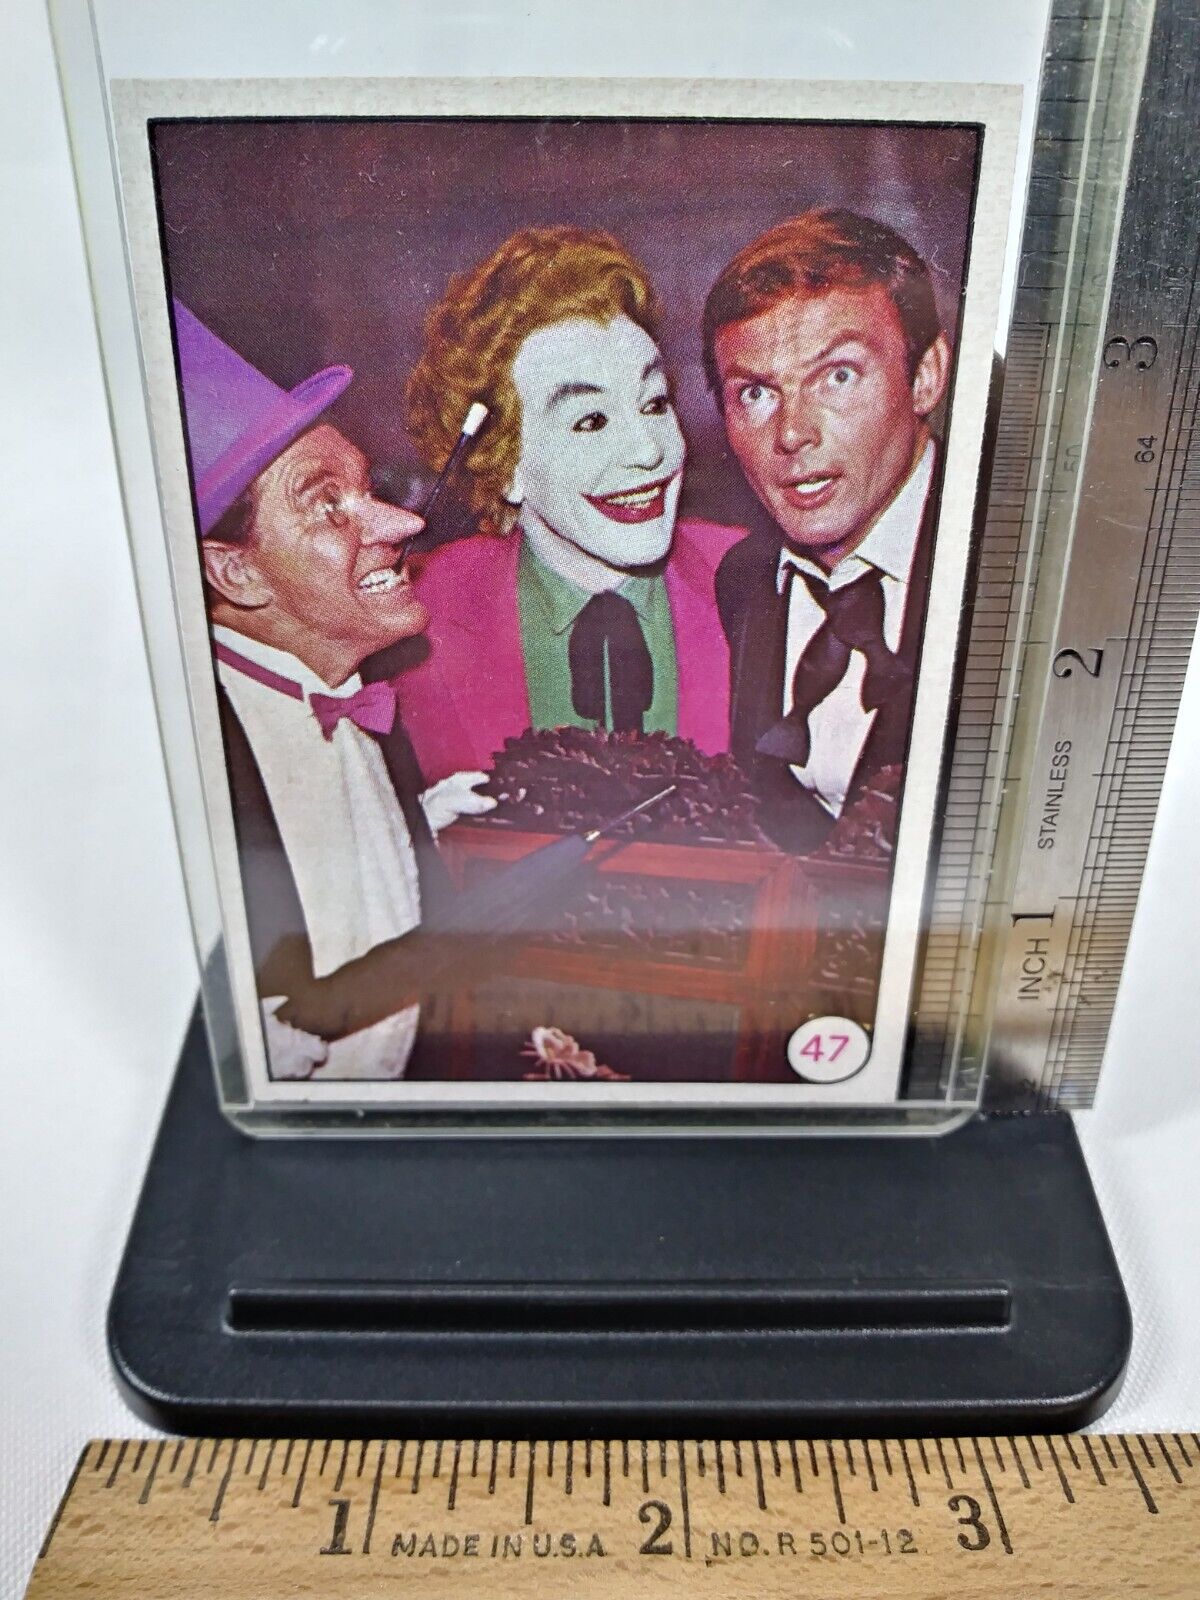 Vintage 1966 Topps Batt LaffsTrading Card Color Photo #47 Penquin Joker Batman